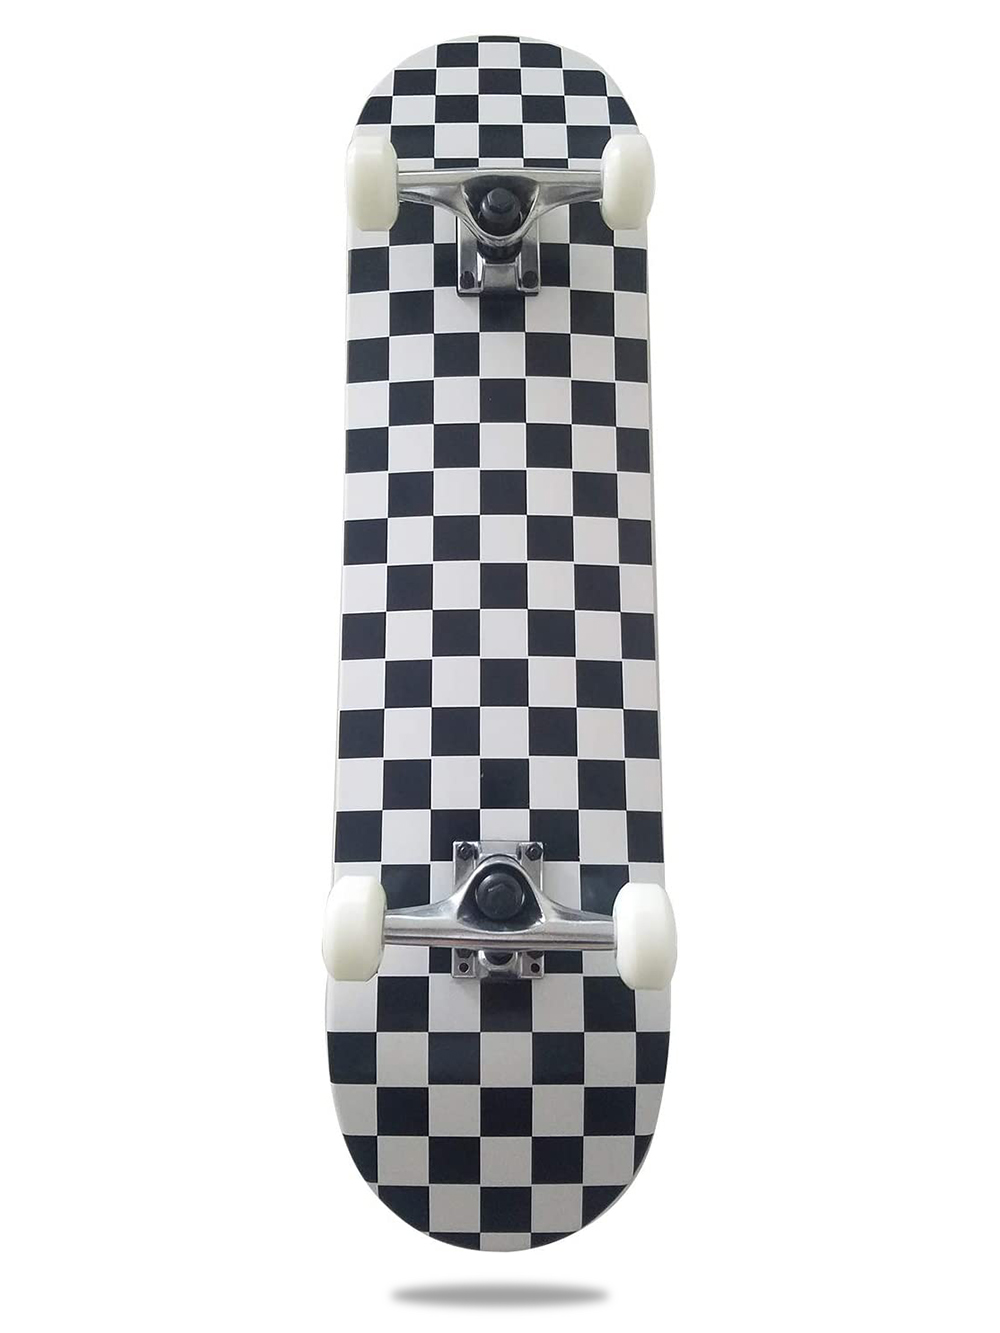 SCSK8 White Checkered Skateboard